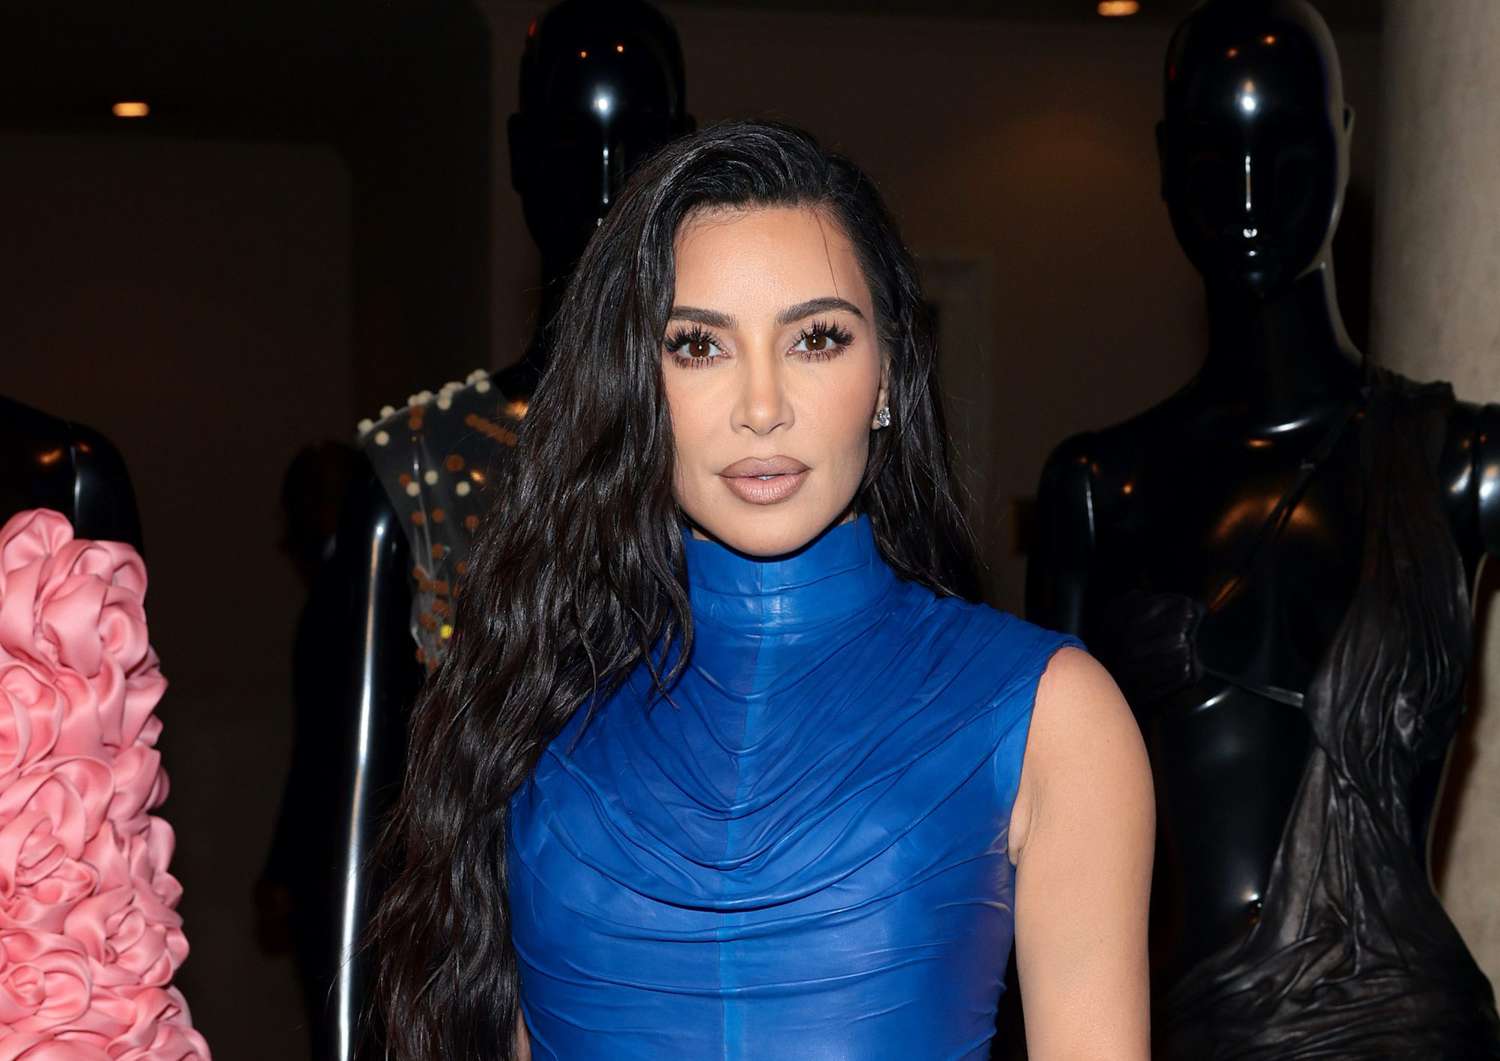 Kim Kardashian deslumbra con su sensual look en la portada de Time